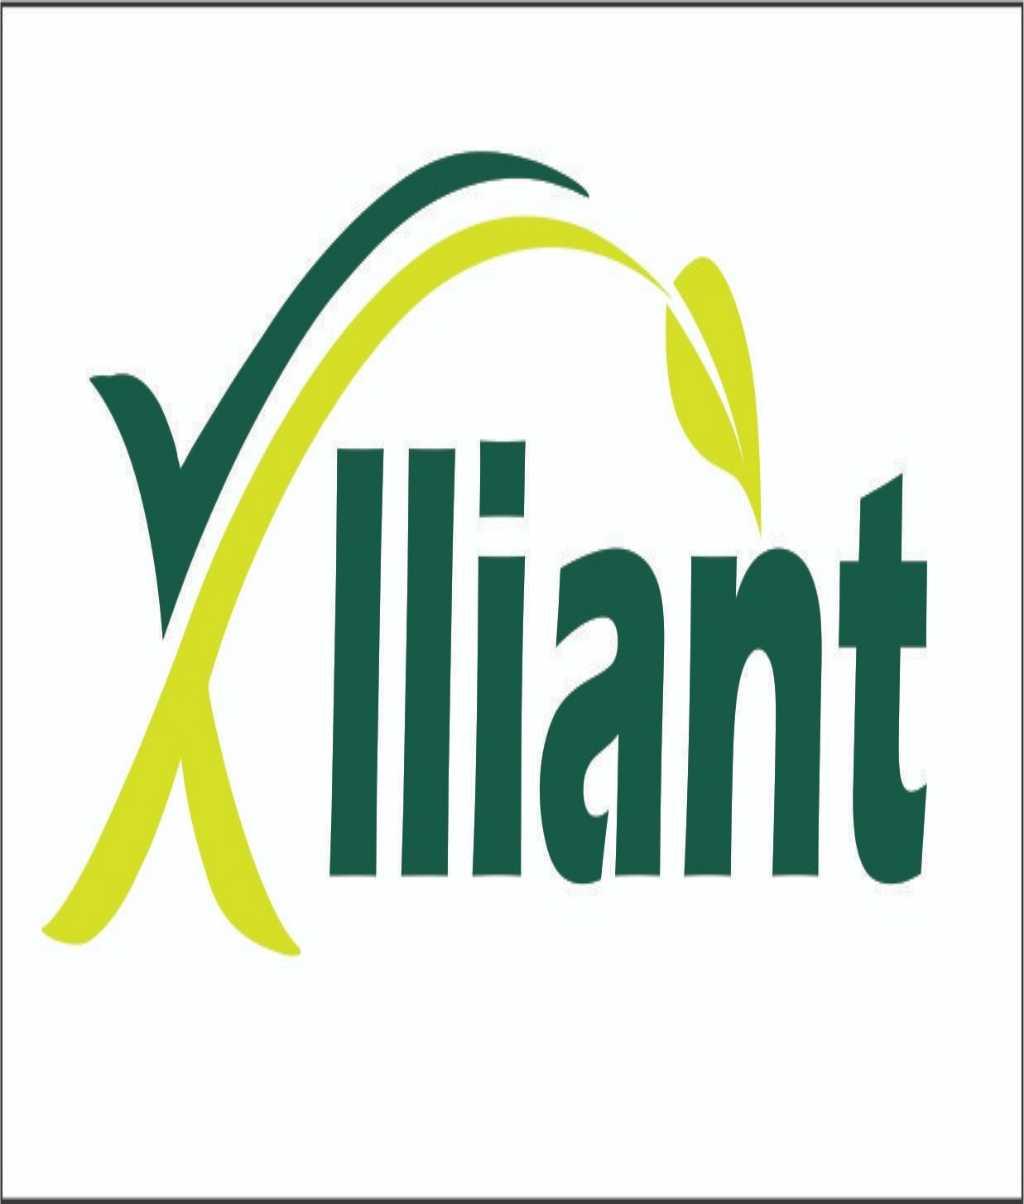 X-lliant Agri Science